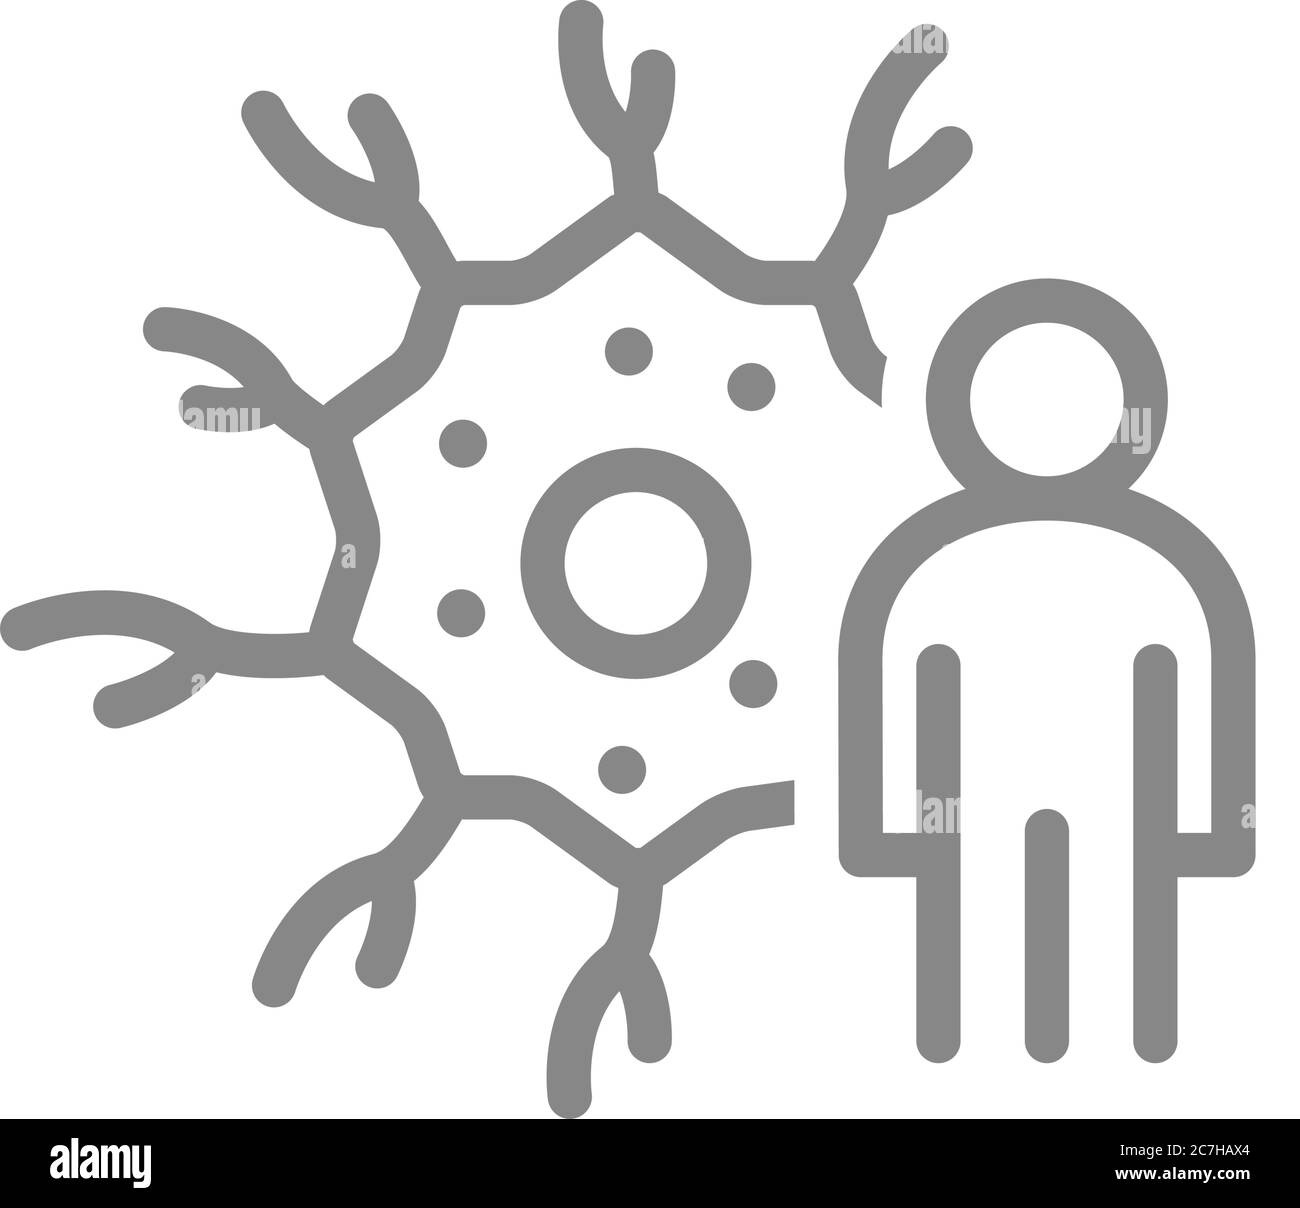 Neurona con icono de línea de hombre. Tejido neural humano, símbolo de célula nerviosa Ilustración del Vector